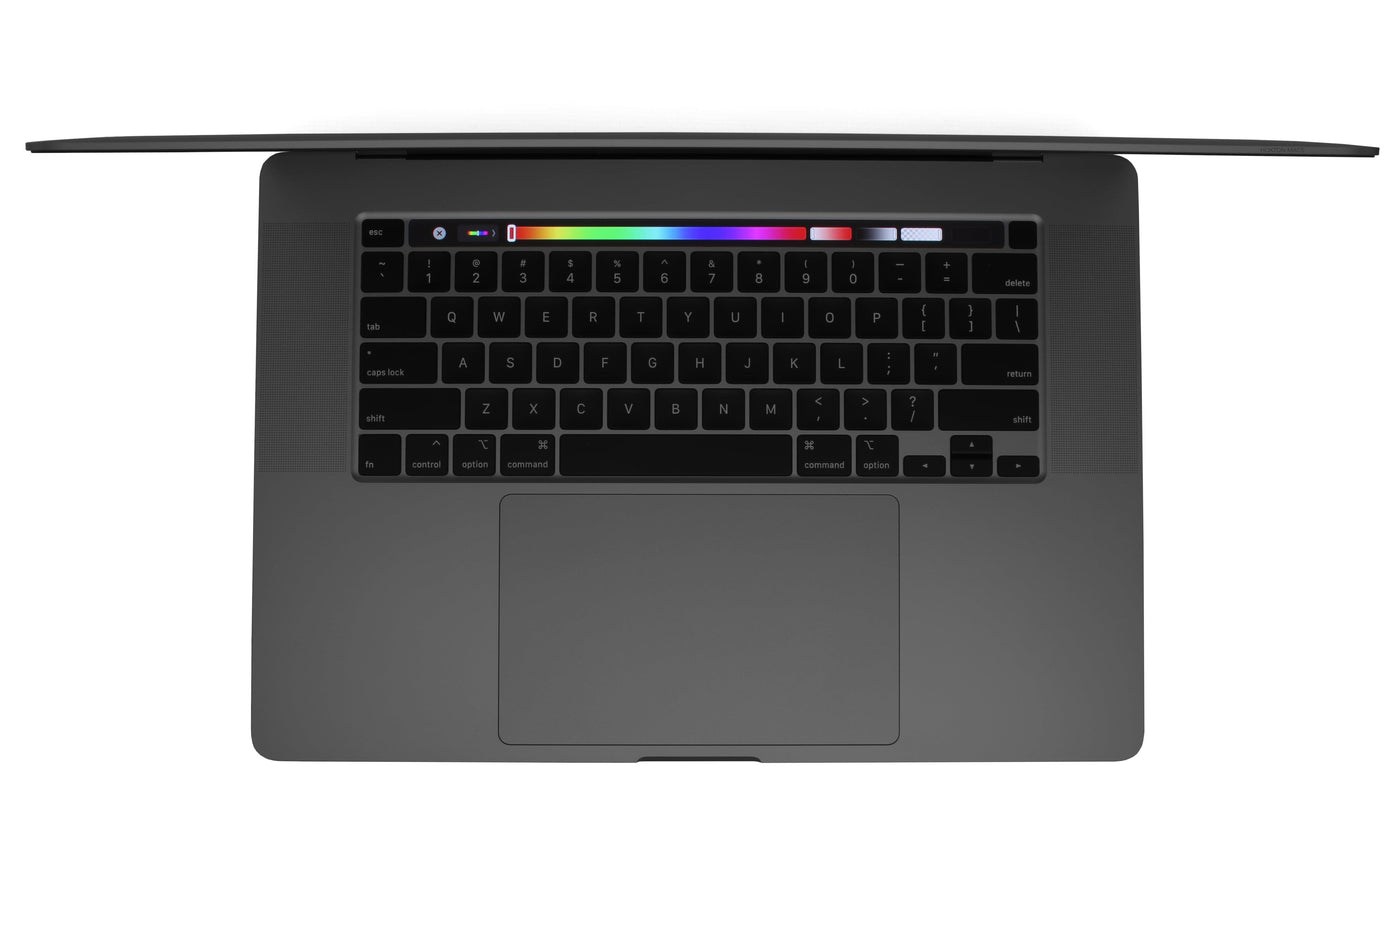 Apple MacBook Pro 15-inch MacBook Pro 16-inch Core i9 2.4GHz (Space Grey, 2019) - Fair